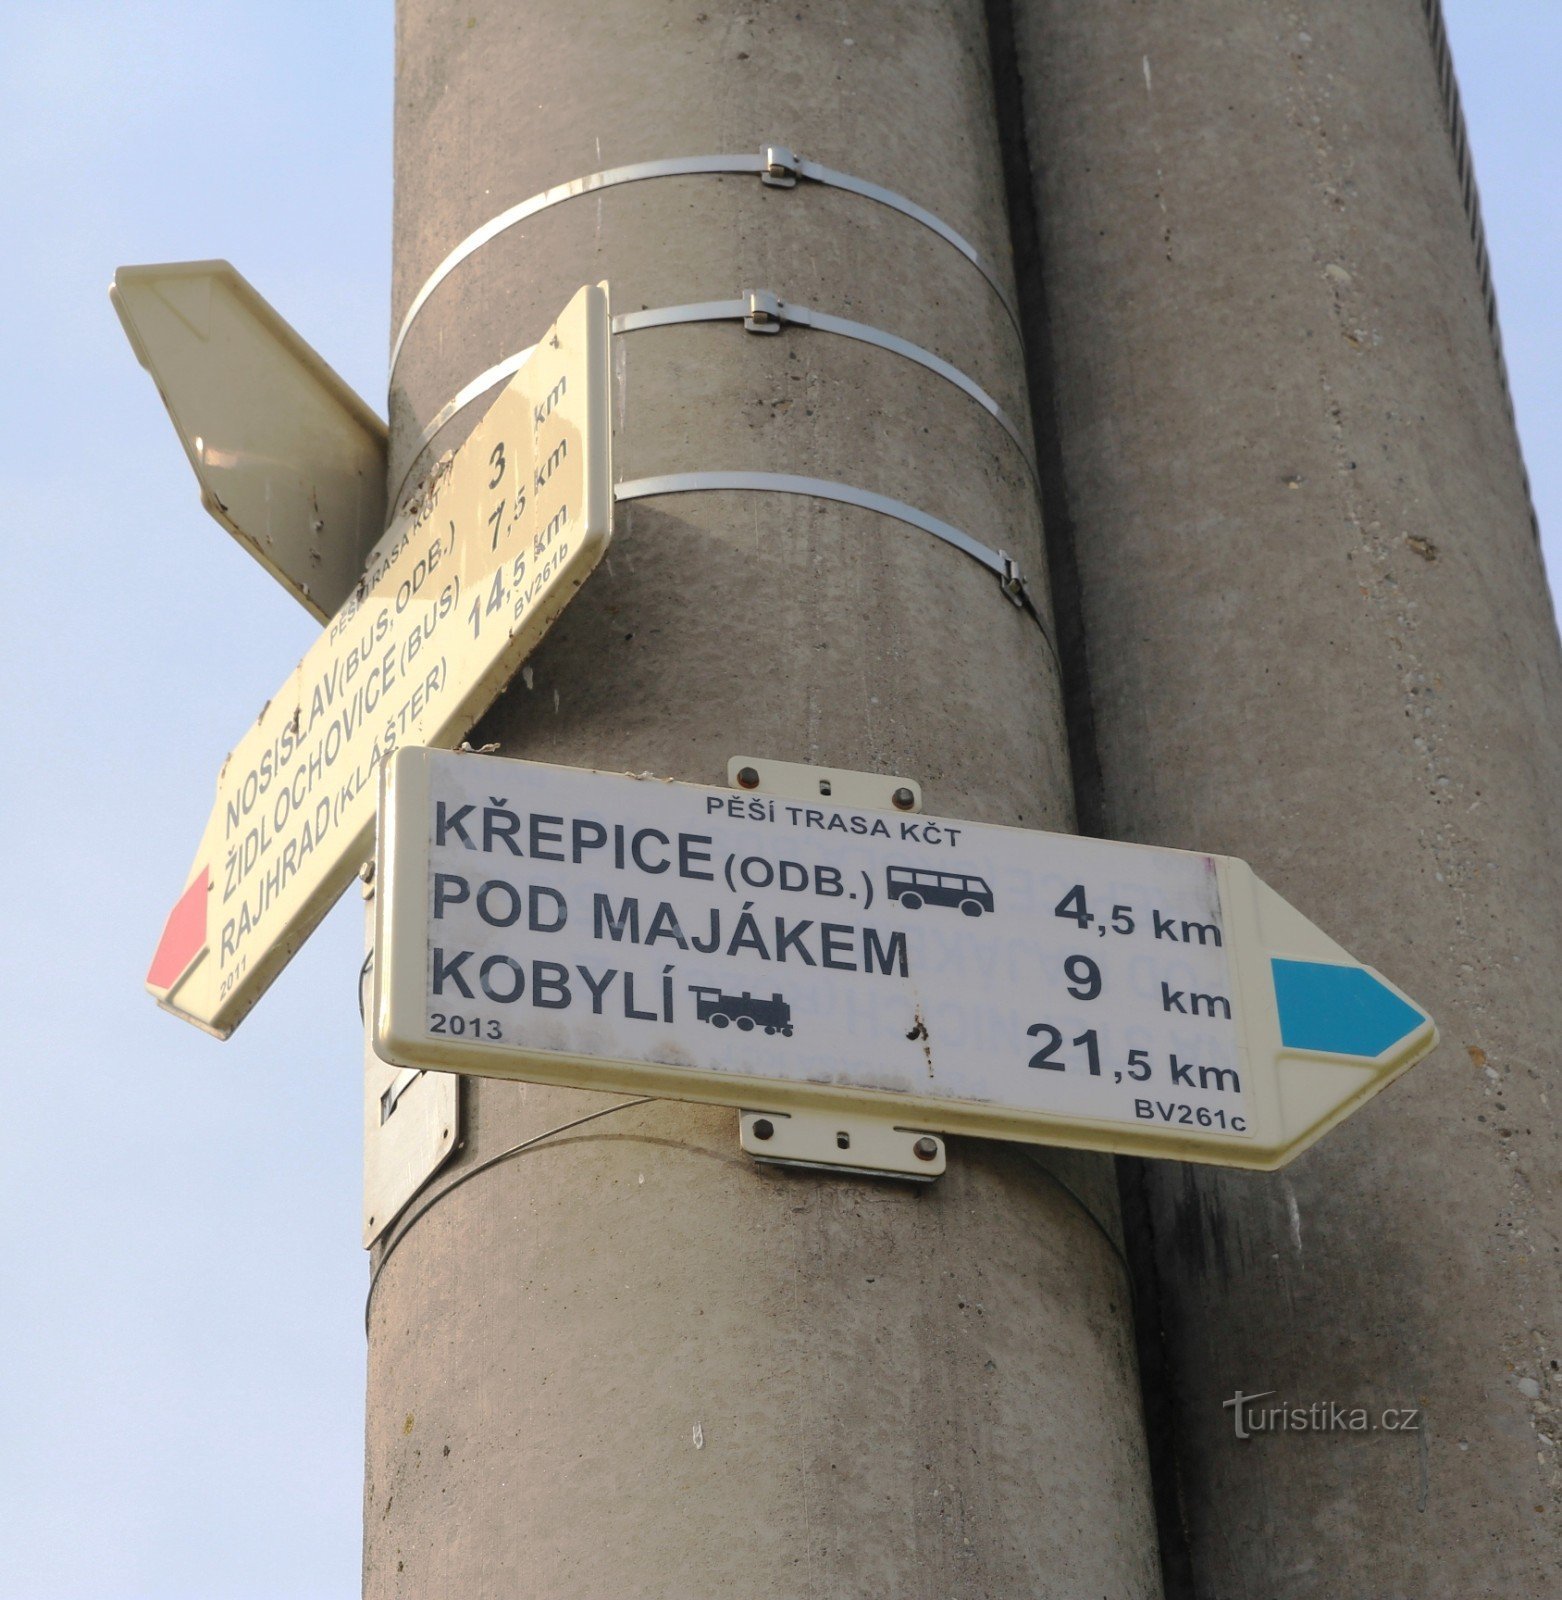 Tourist crossroads of Great Germany